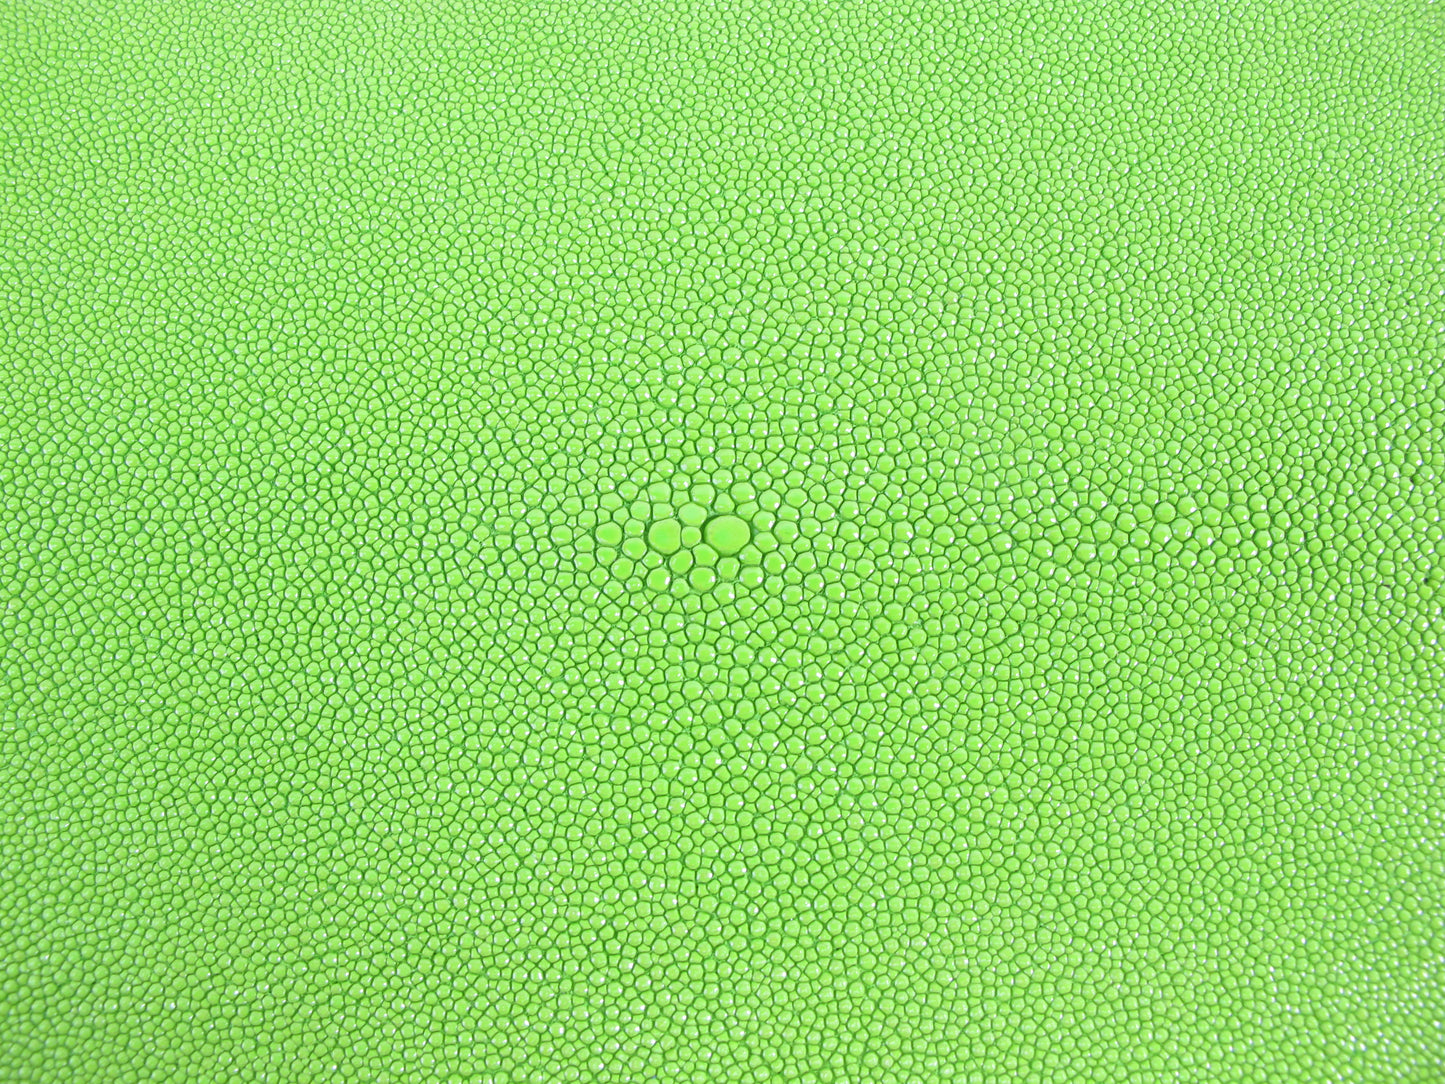 Genuine Stingray Skin Leather Round Shape Hide Pelt Neon Green